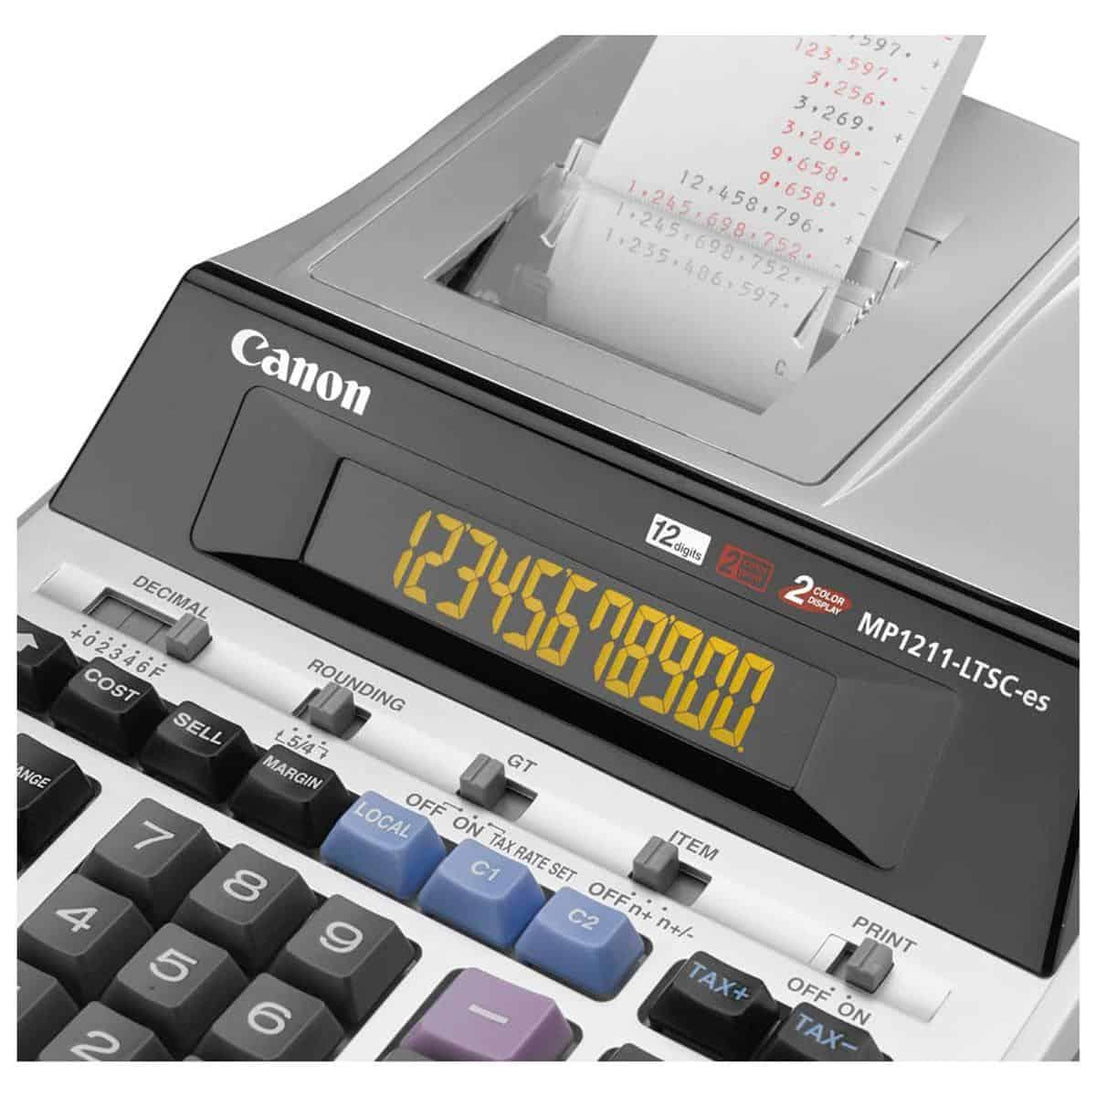 Canon MP1211-LTSC Adding Machine & Calculator - Avansa Business Technologies